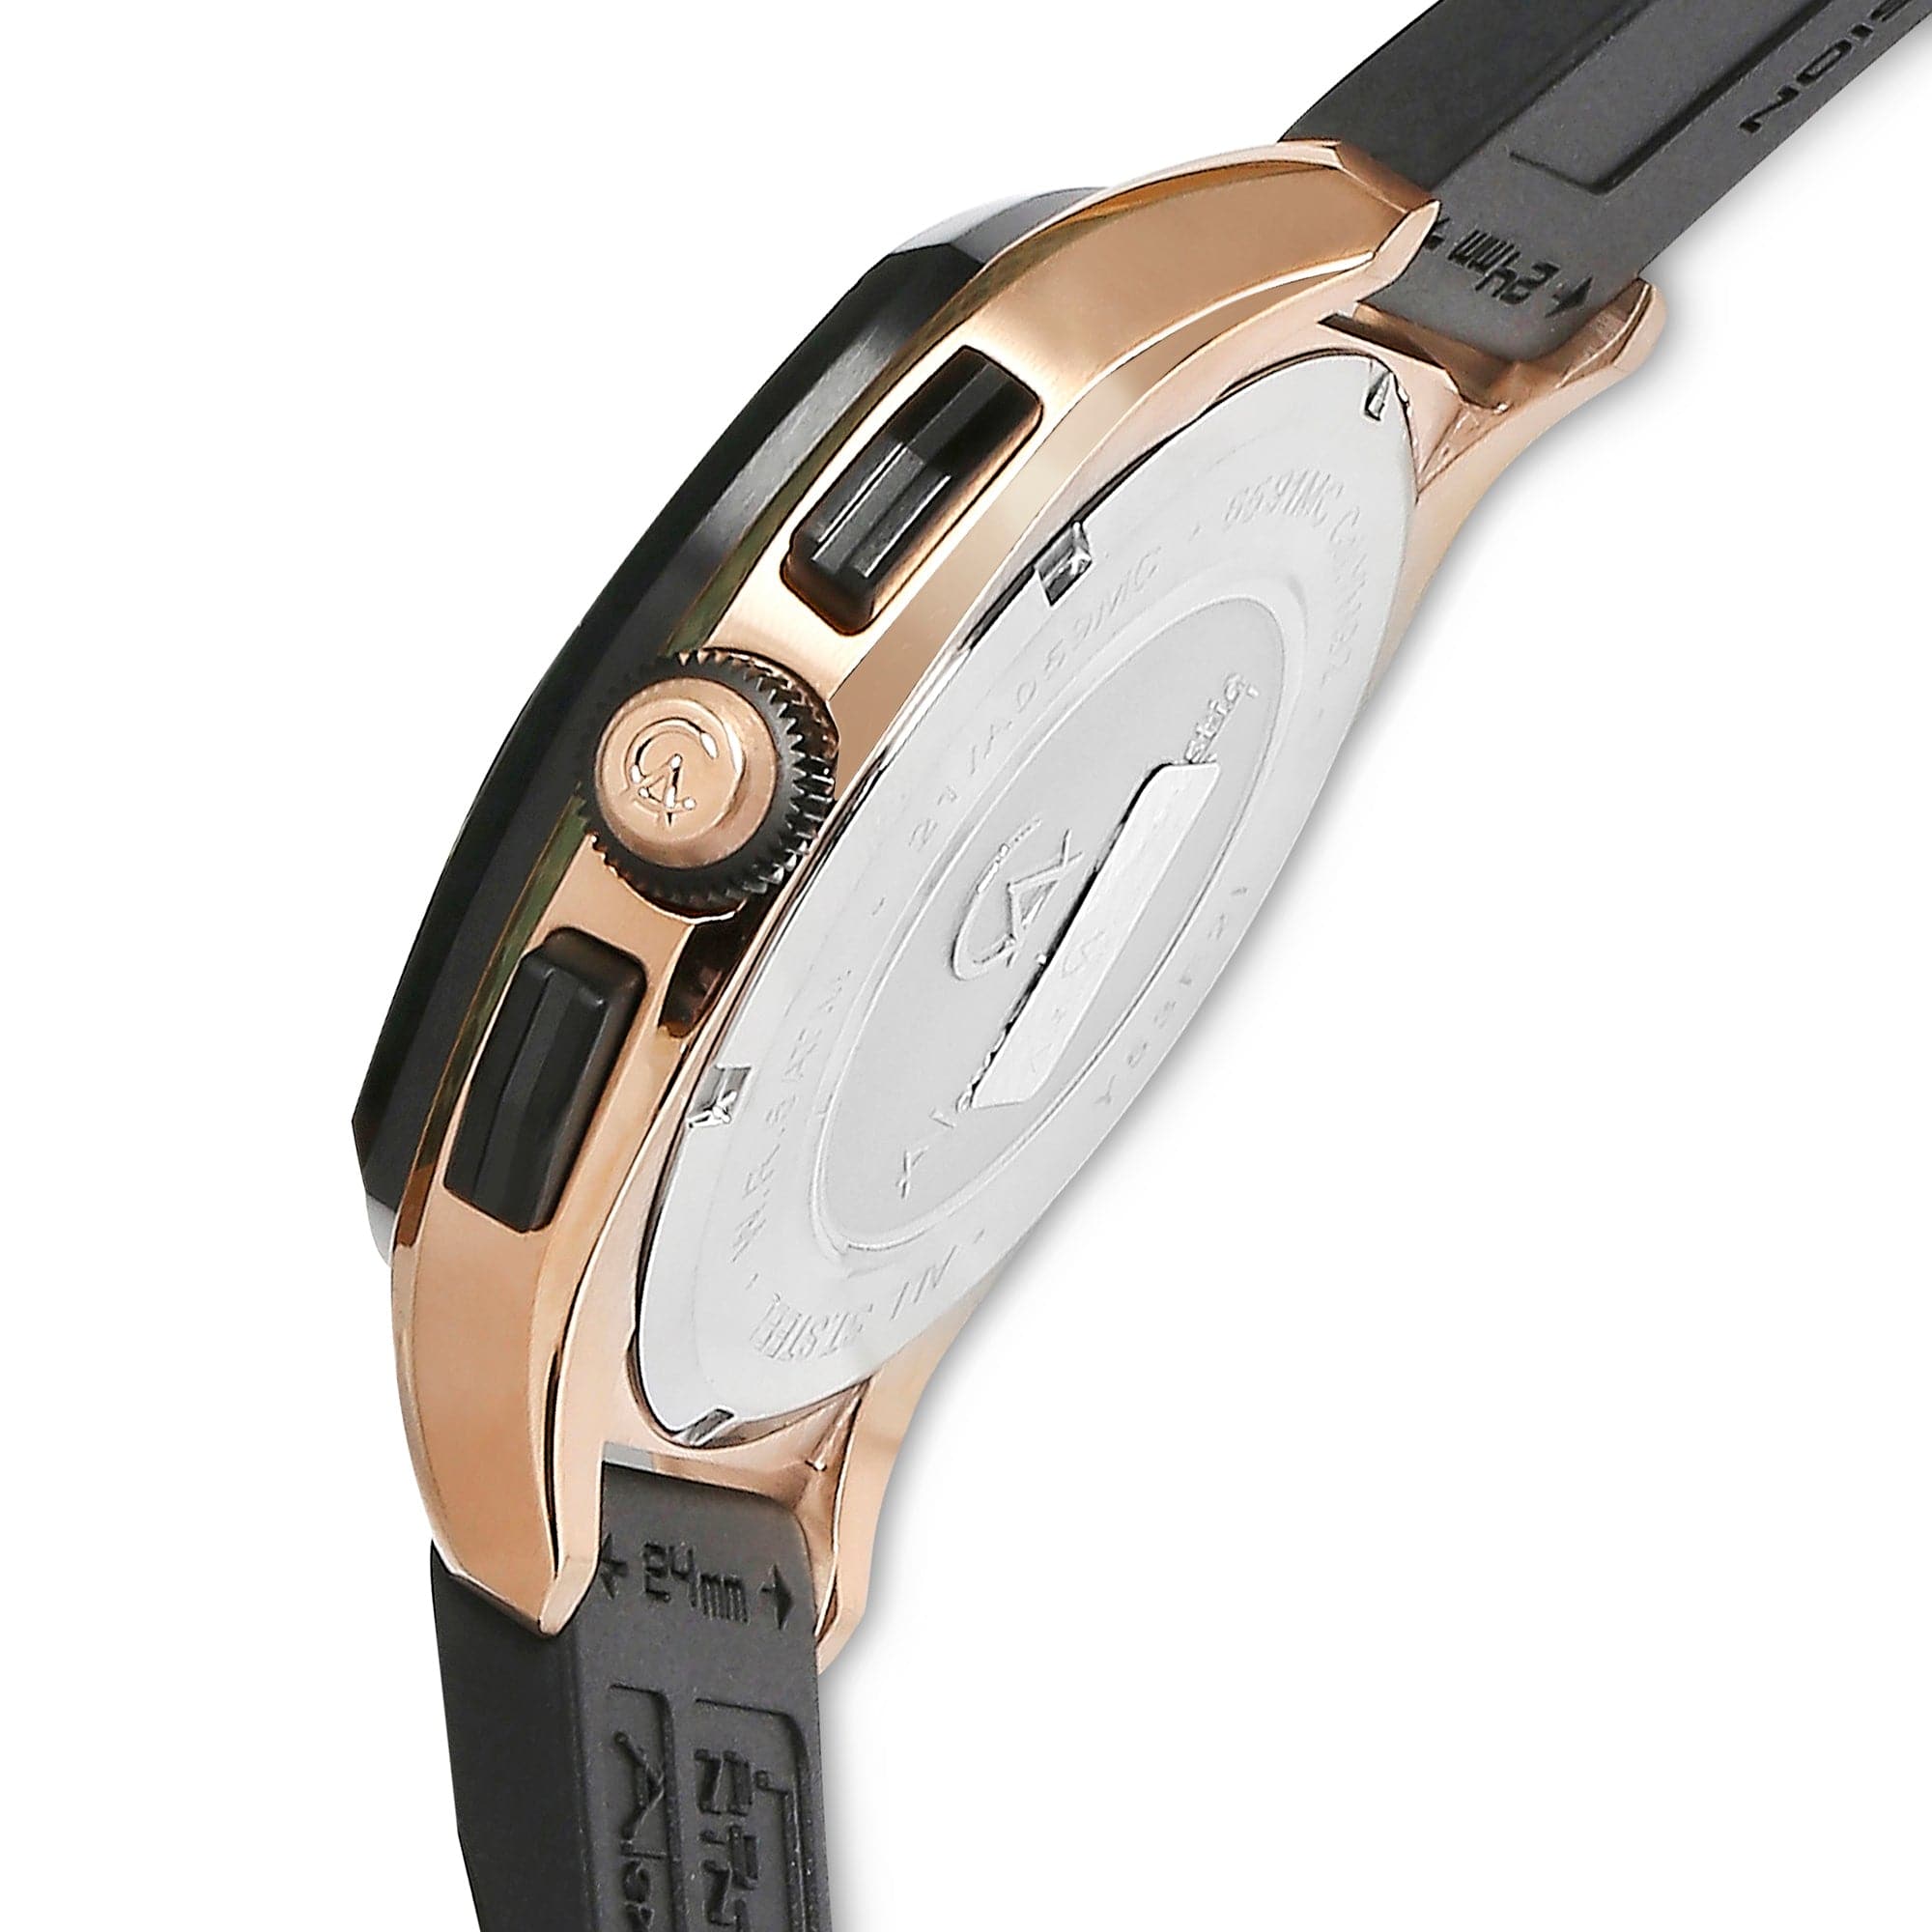 Alexandre Christie Mens 45 mm Alexandre Christie Black Dial Silicone Analogue Watch - 6591MCRBRBA - Kamal Watch Company